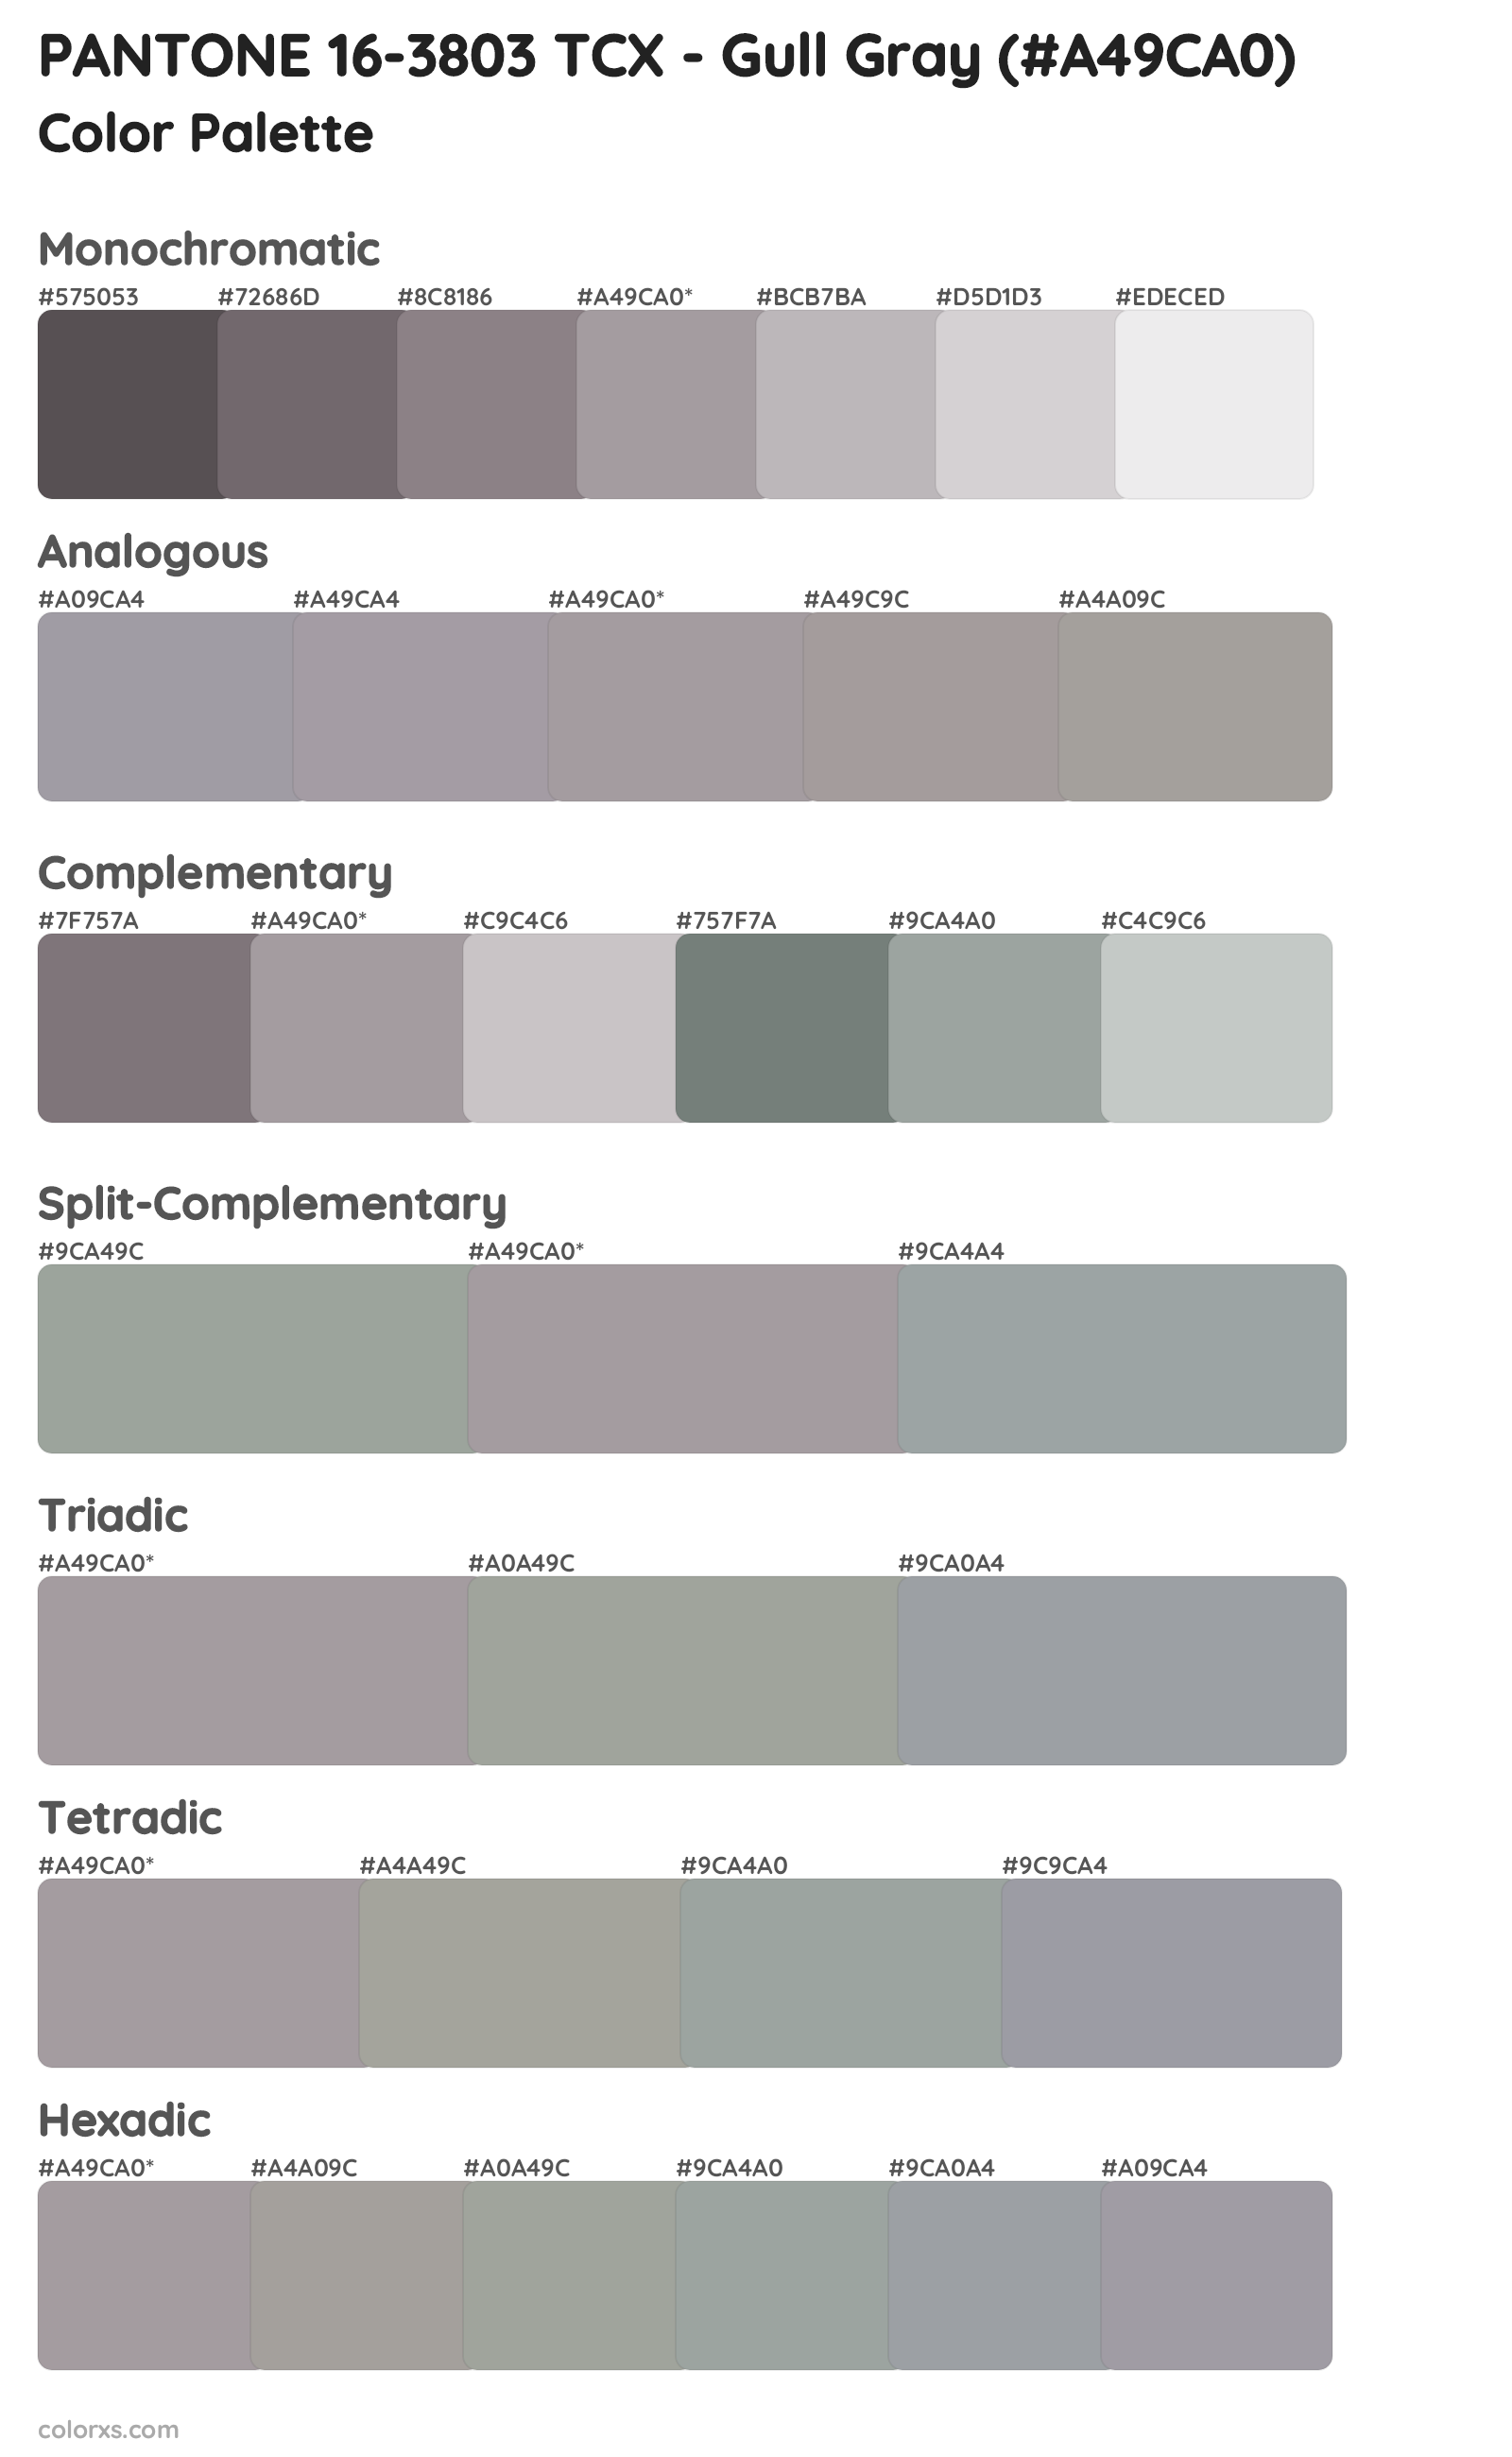 PANTONE 16-3803 TCX - Gull Gray Color Scheme Palettes